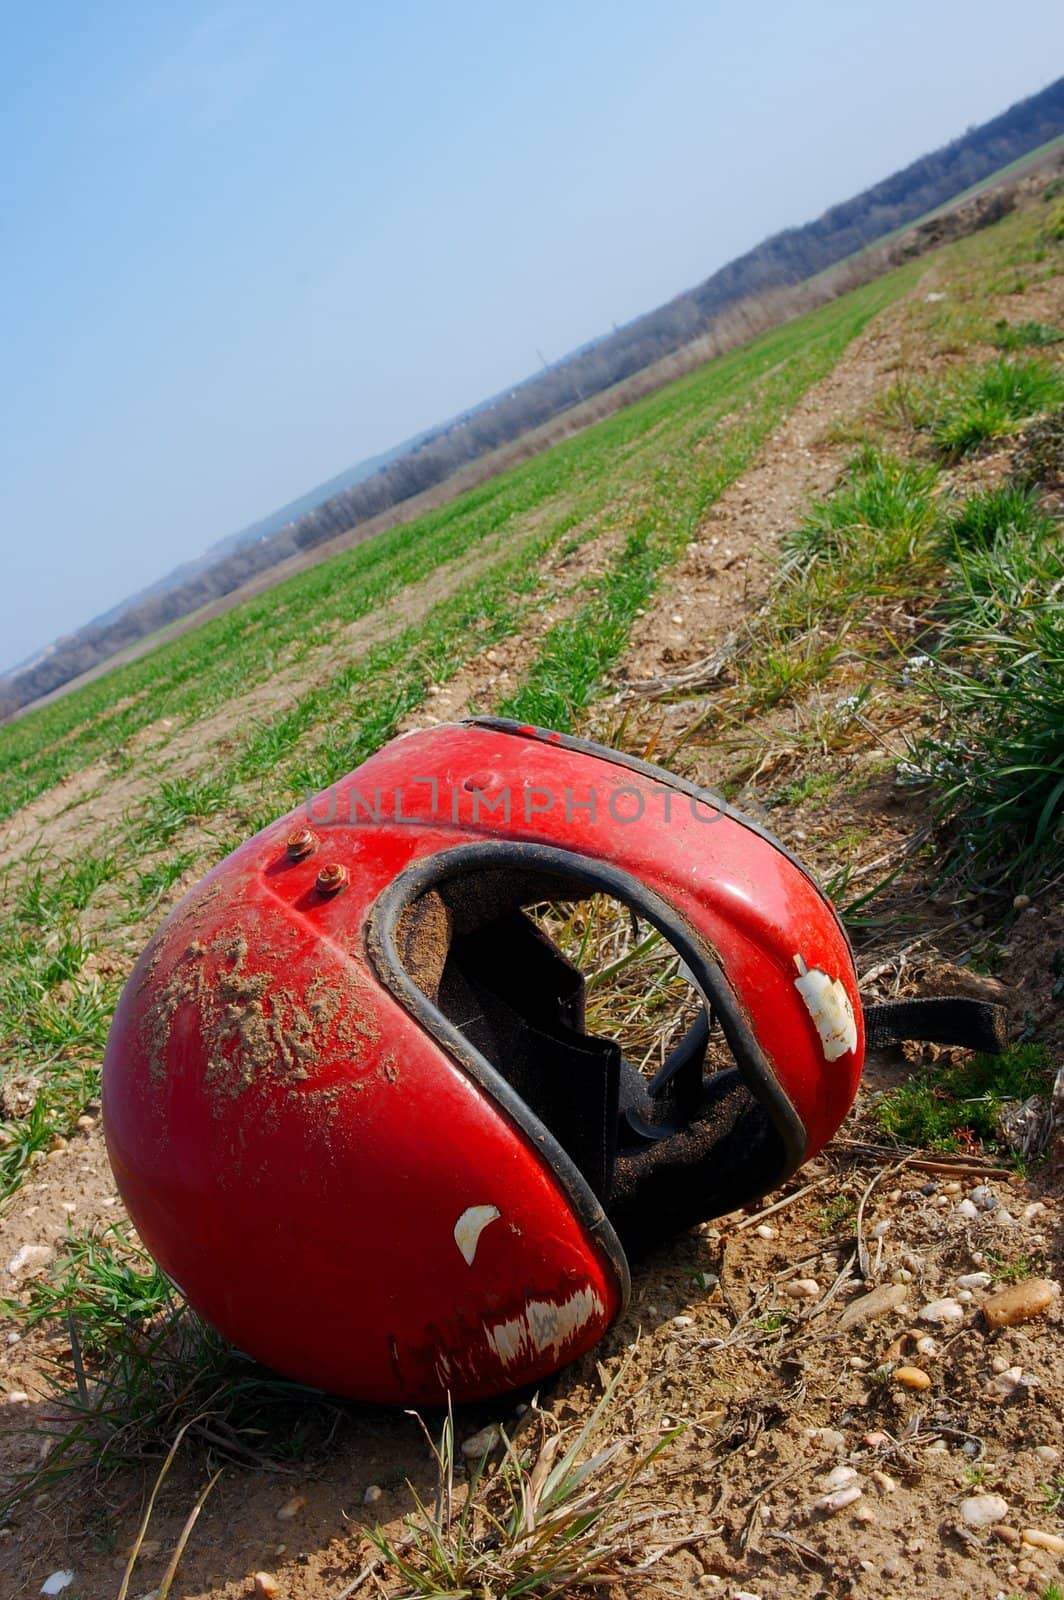 Red broken helmet on an agricultural field